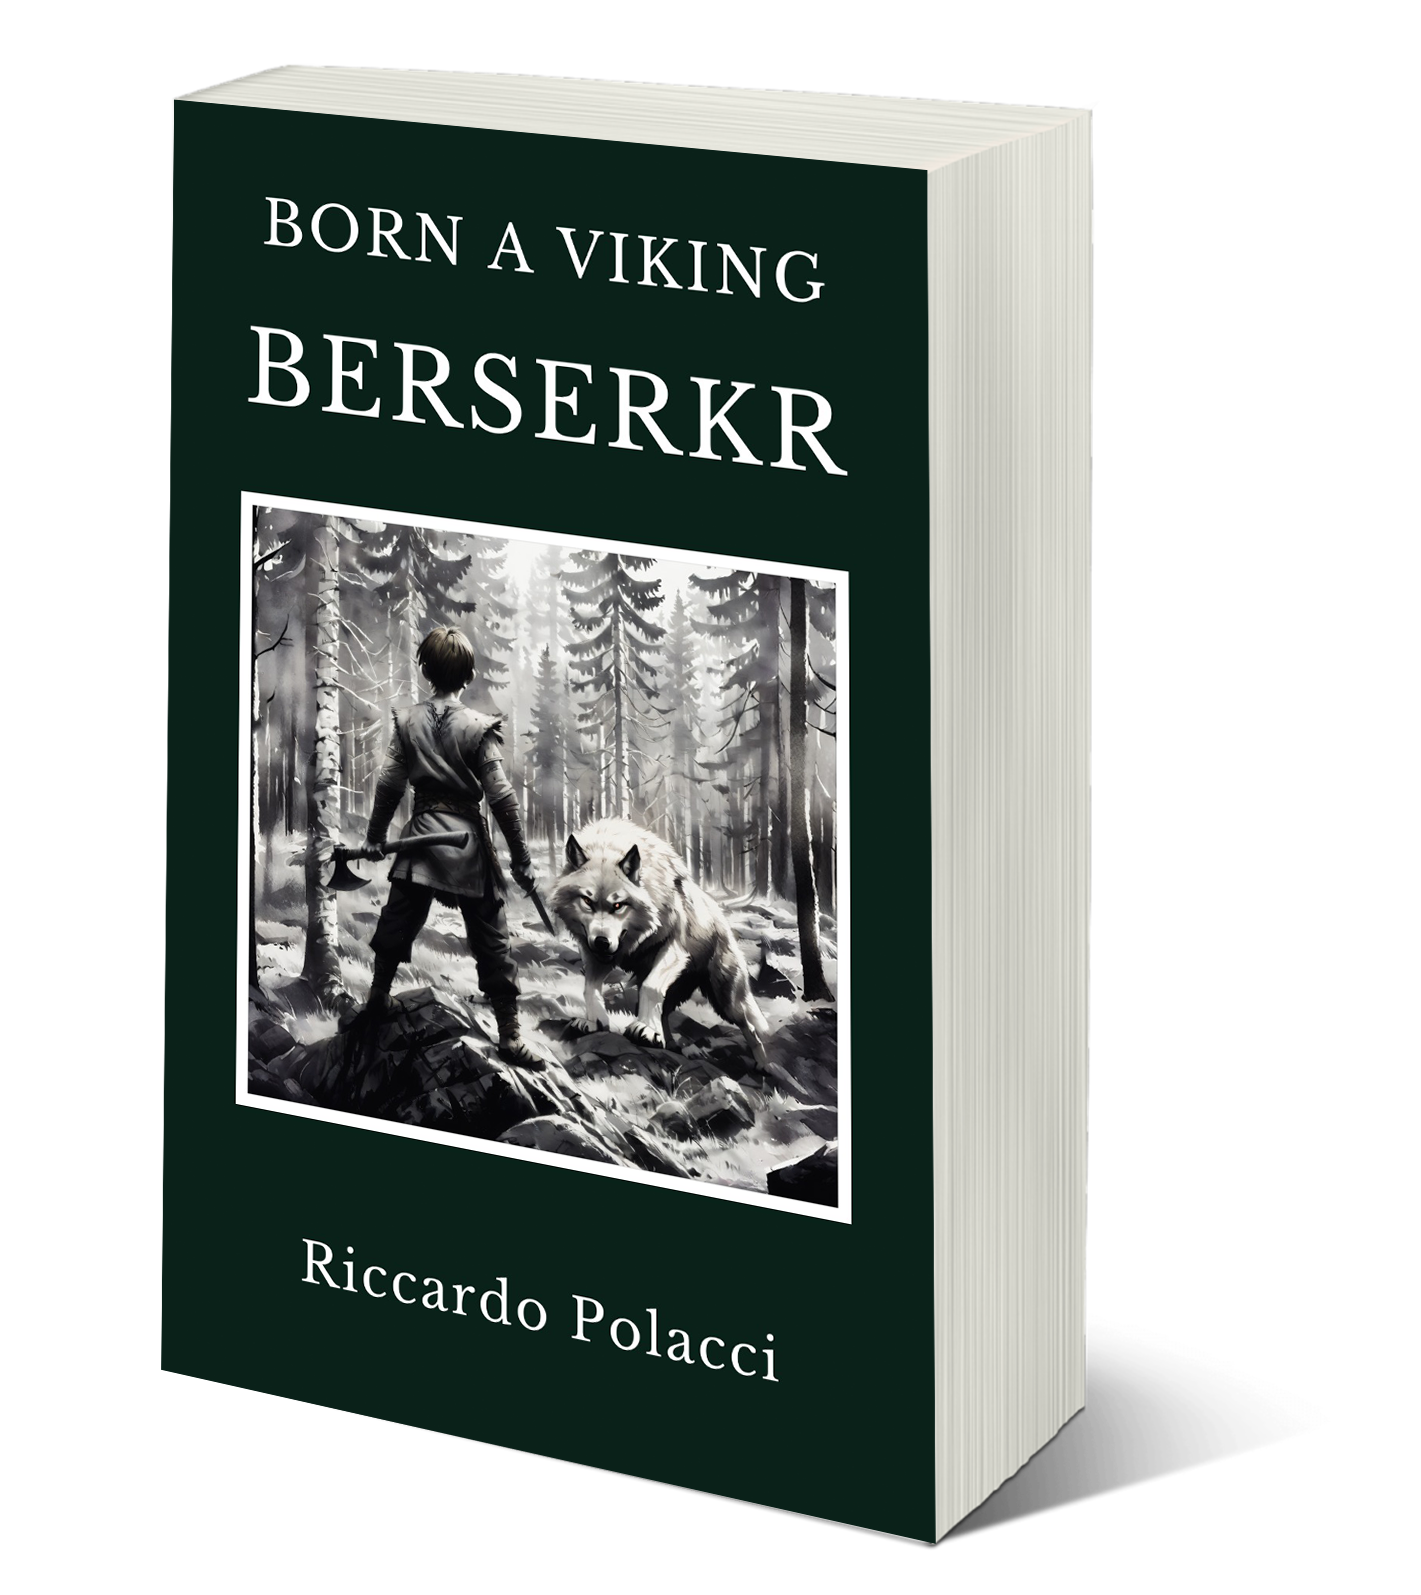 Born a Viking: Berserk Book cover